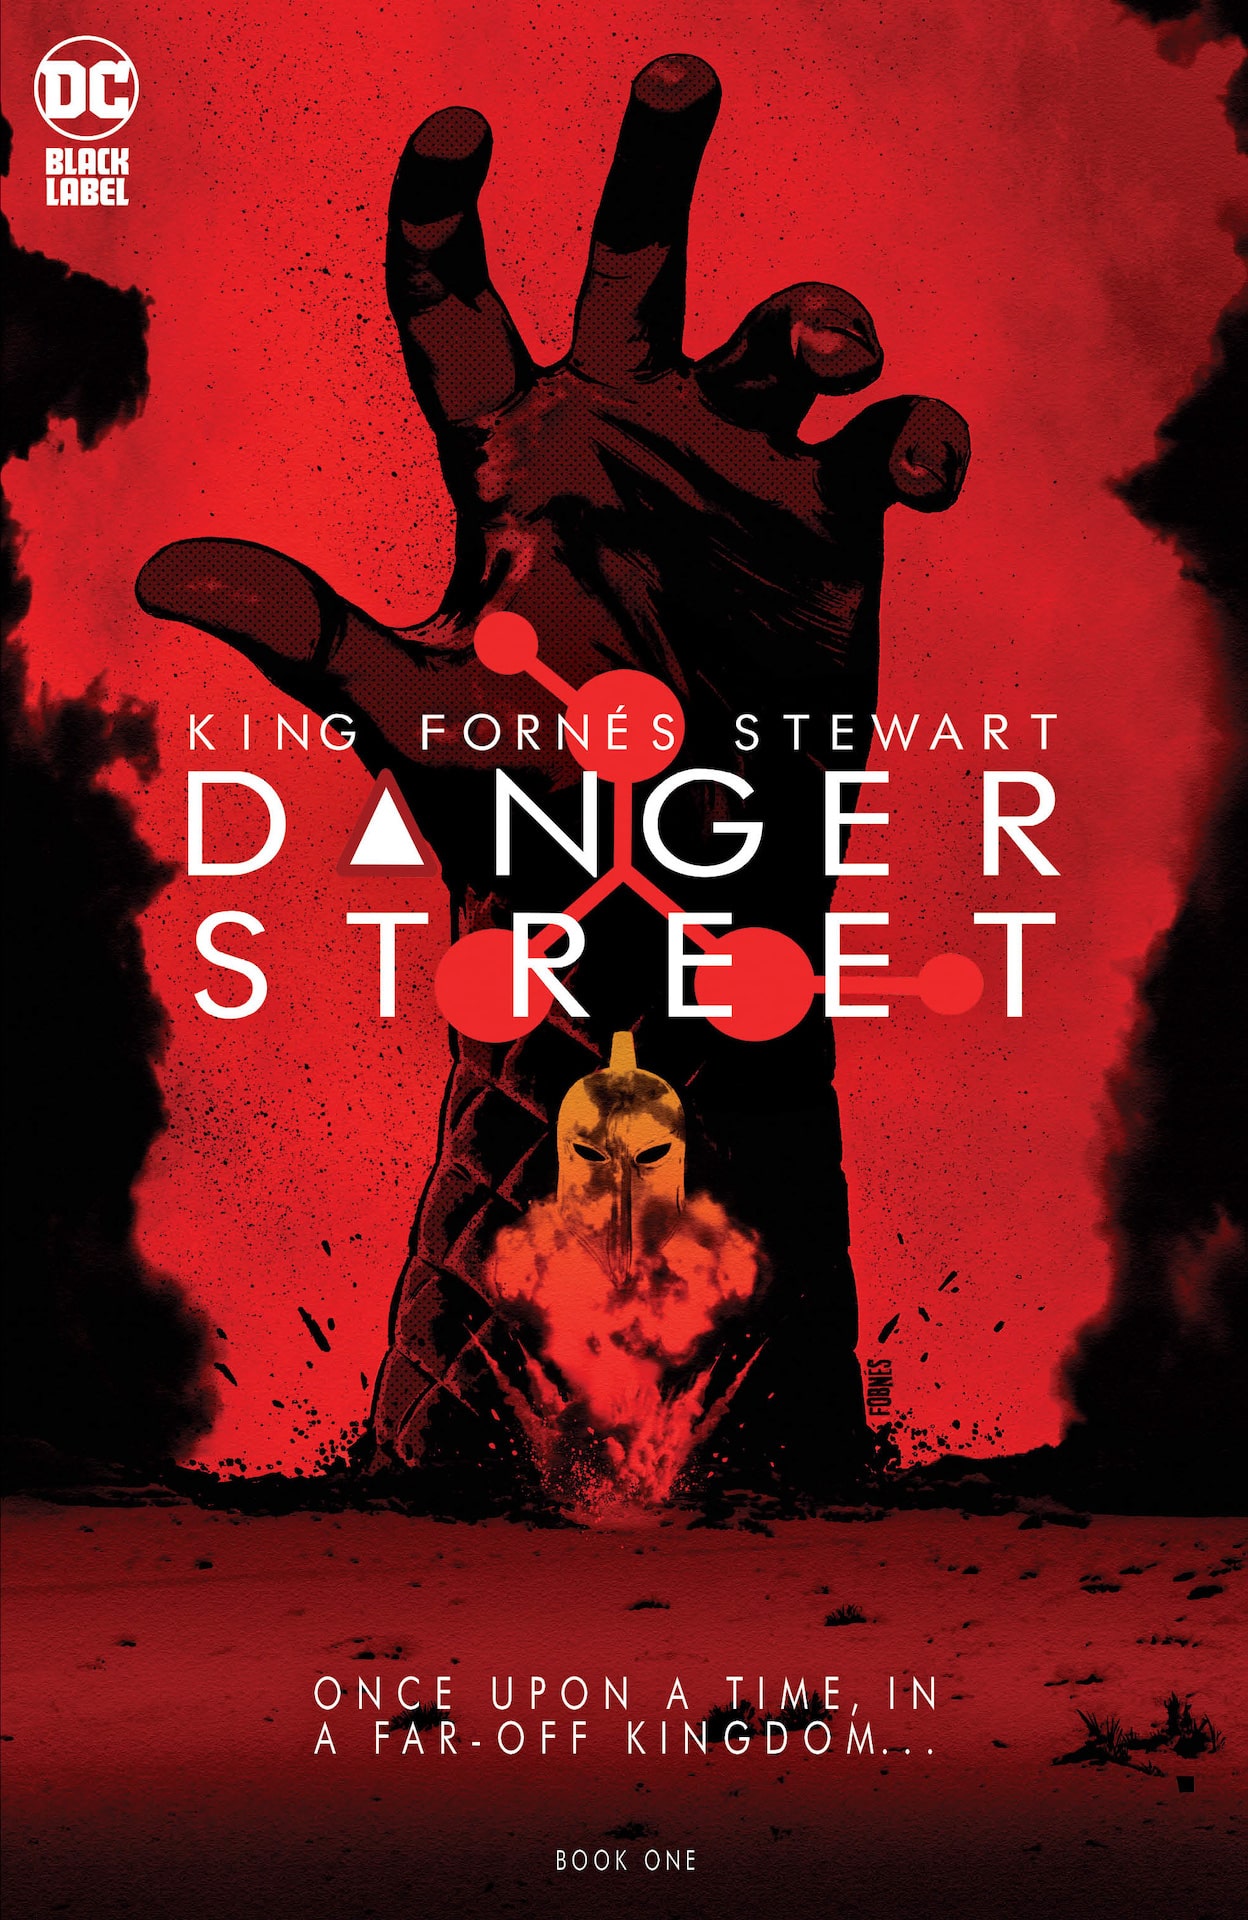 DC Preview: Danger Street #1